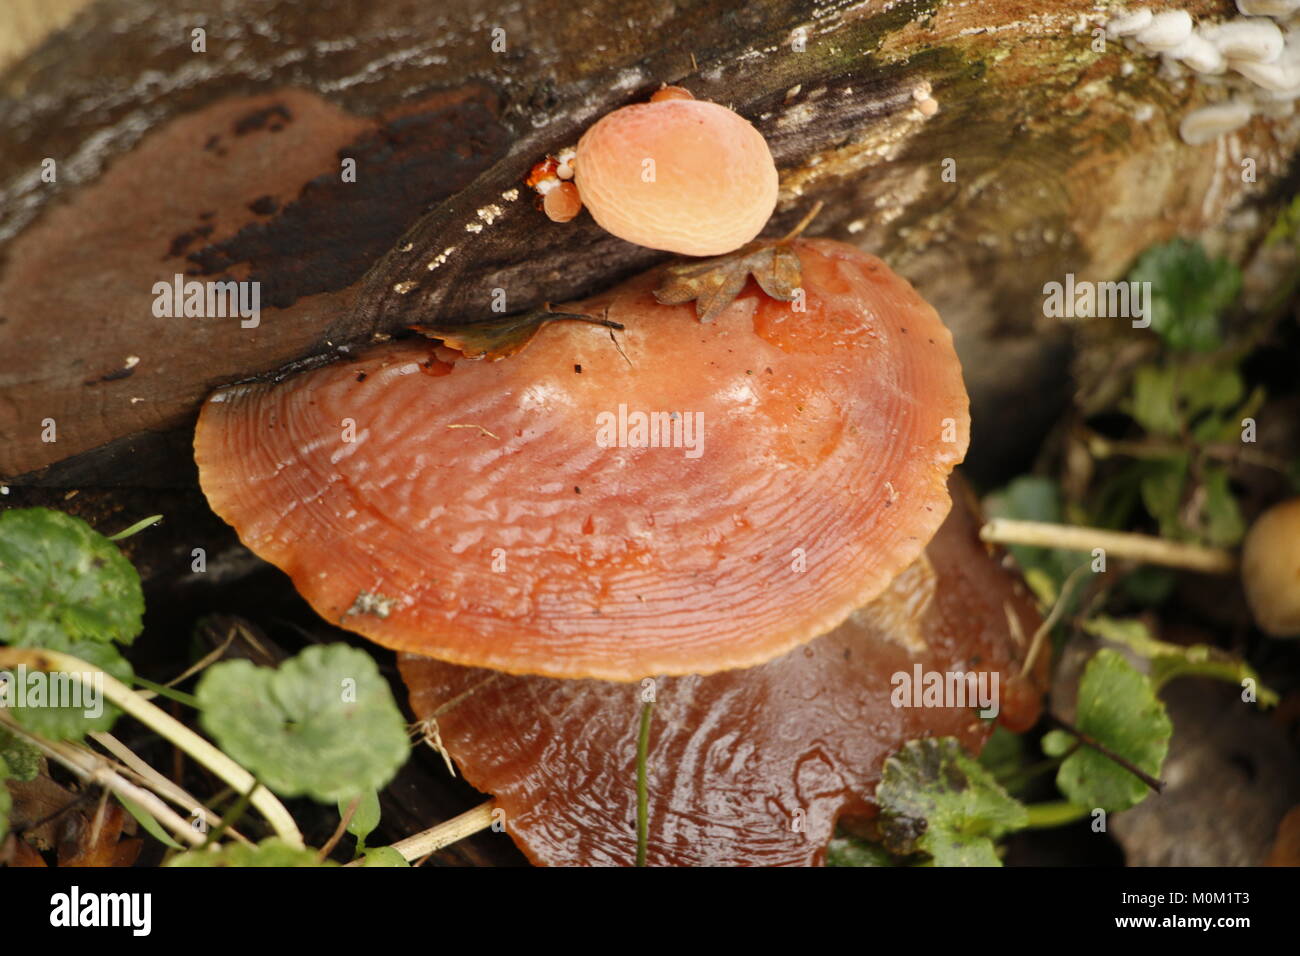 Beefsteak fungus can be eaten Stock Photo